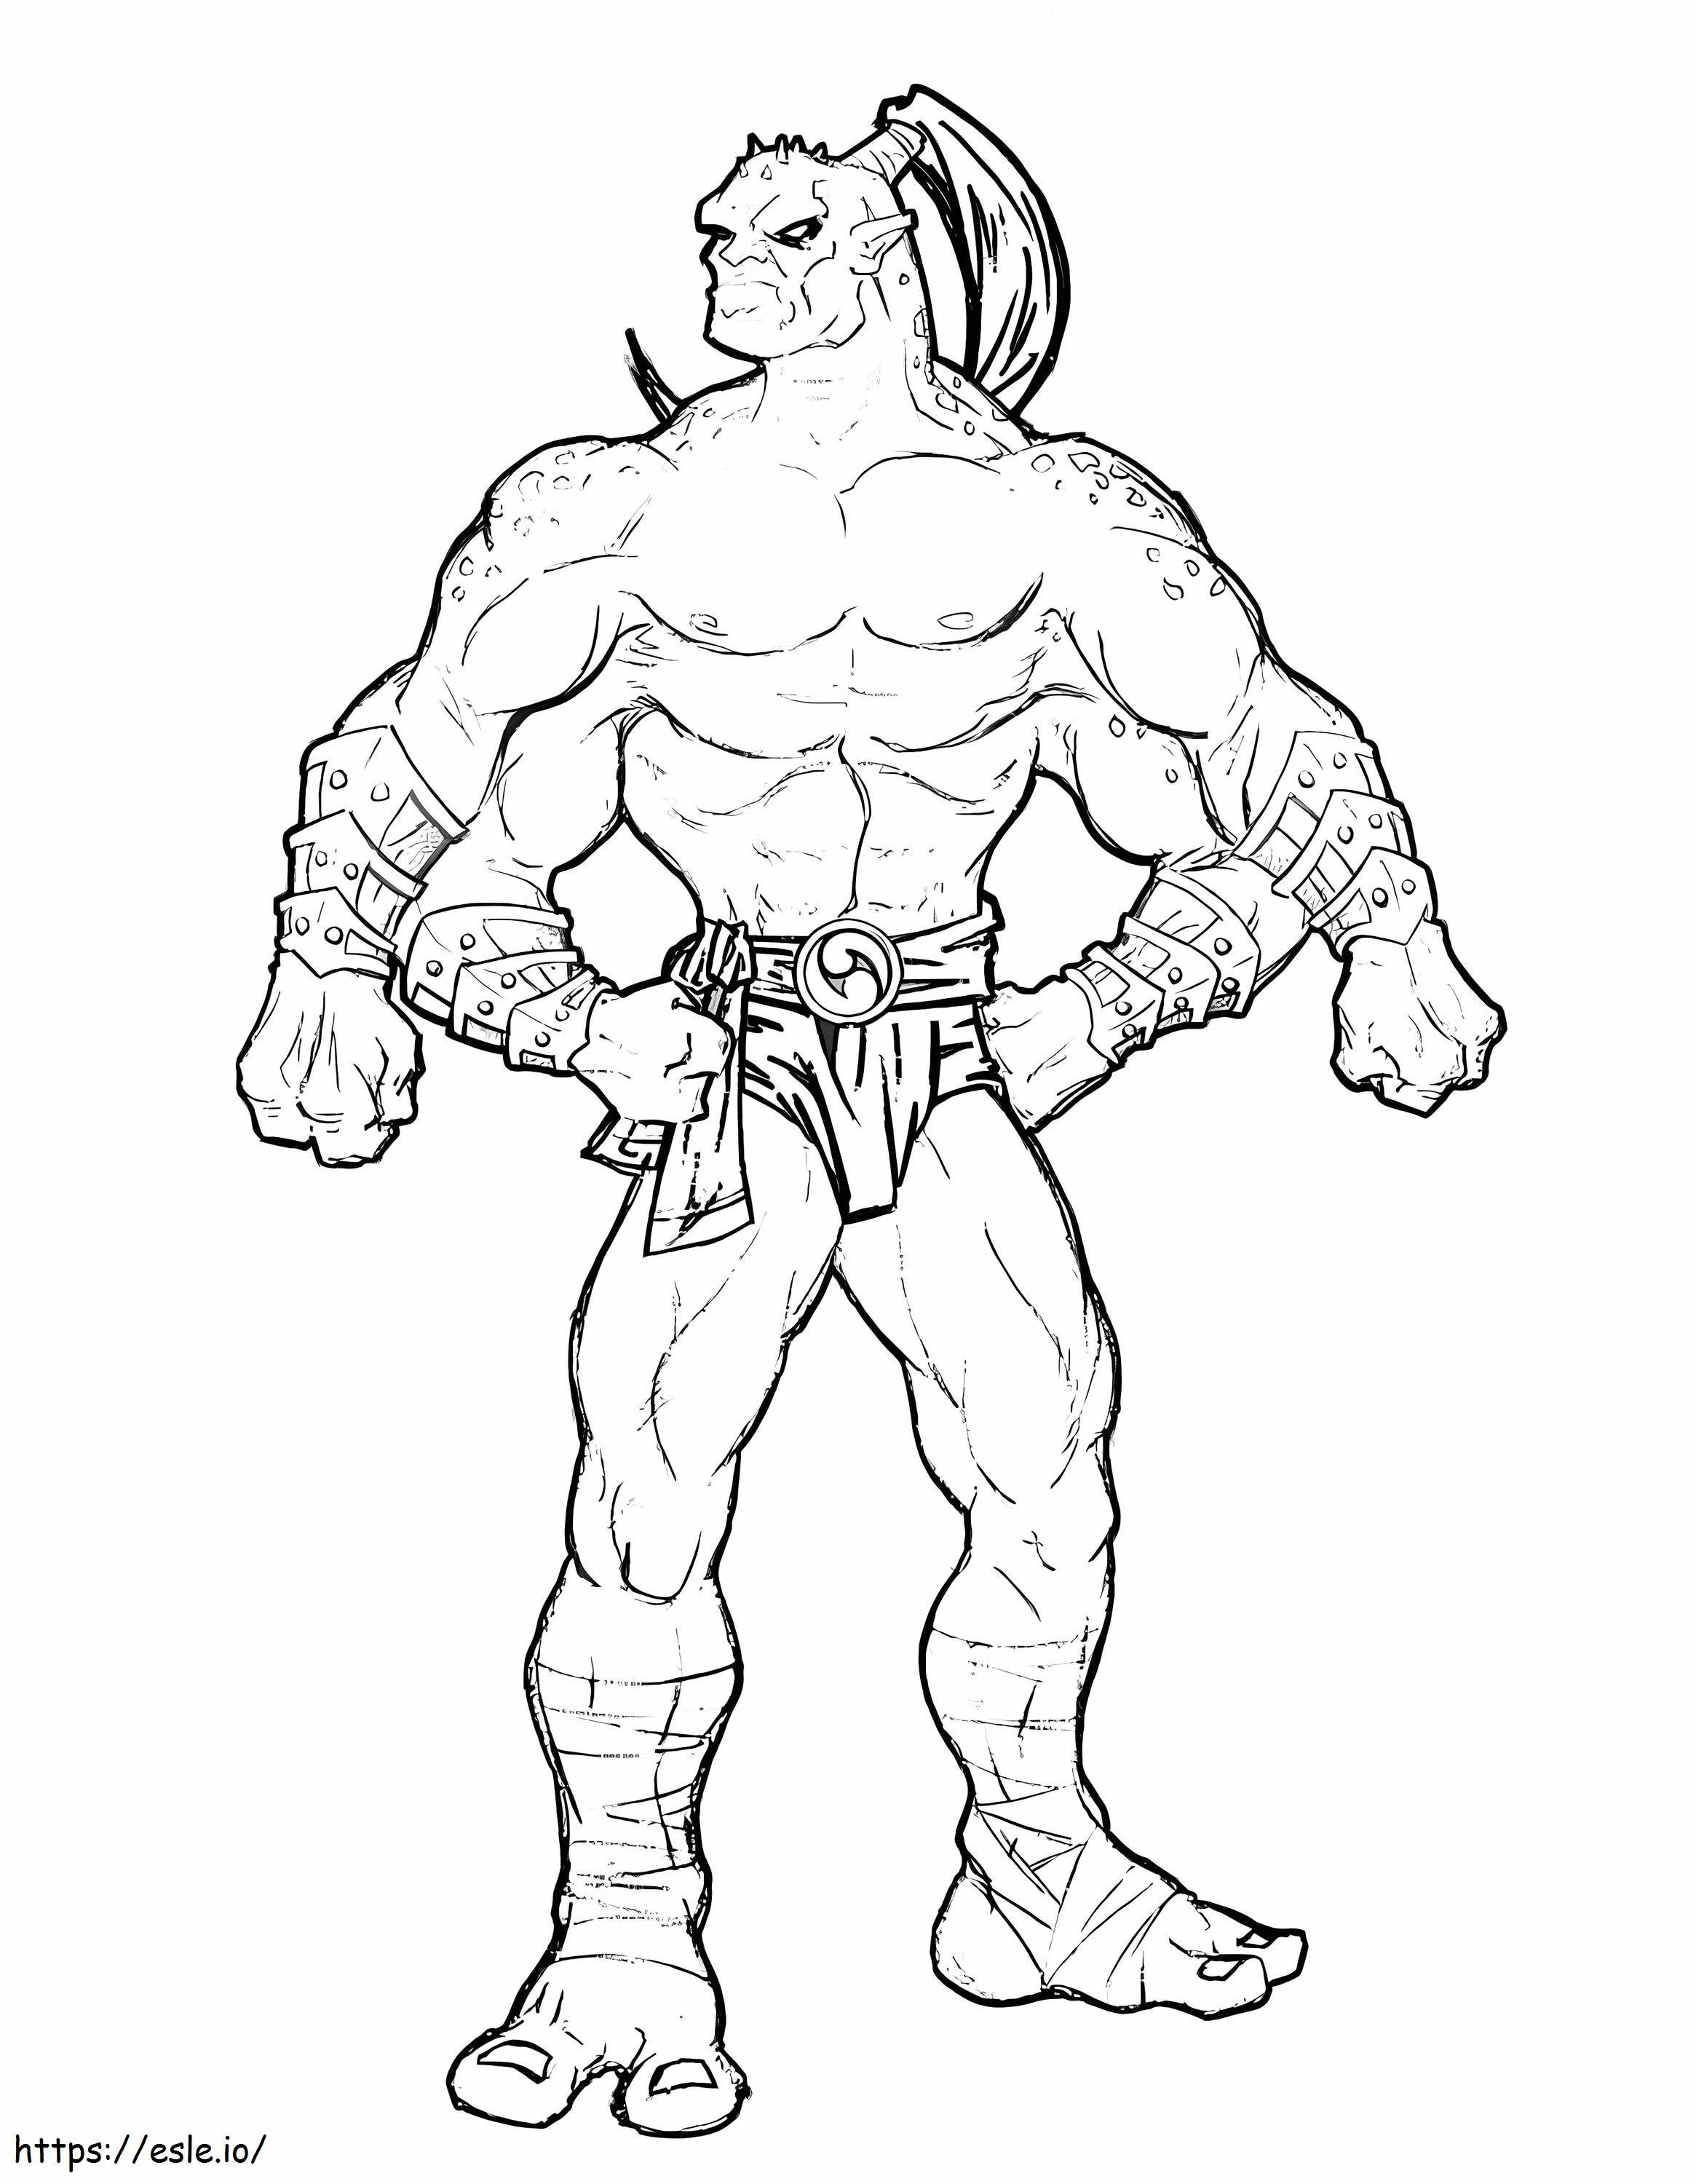 Goro From Mortal Kombat coloring page